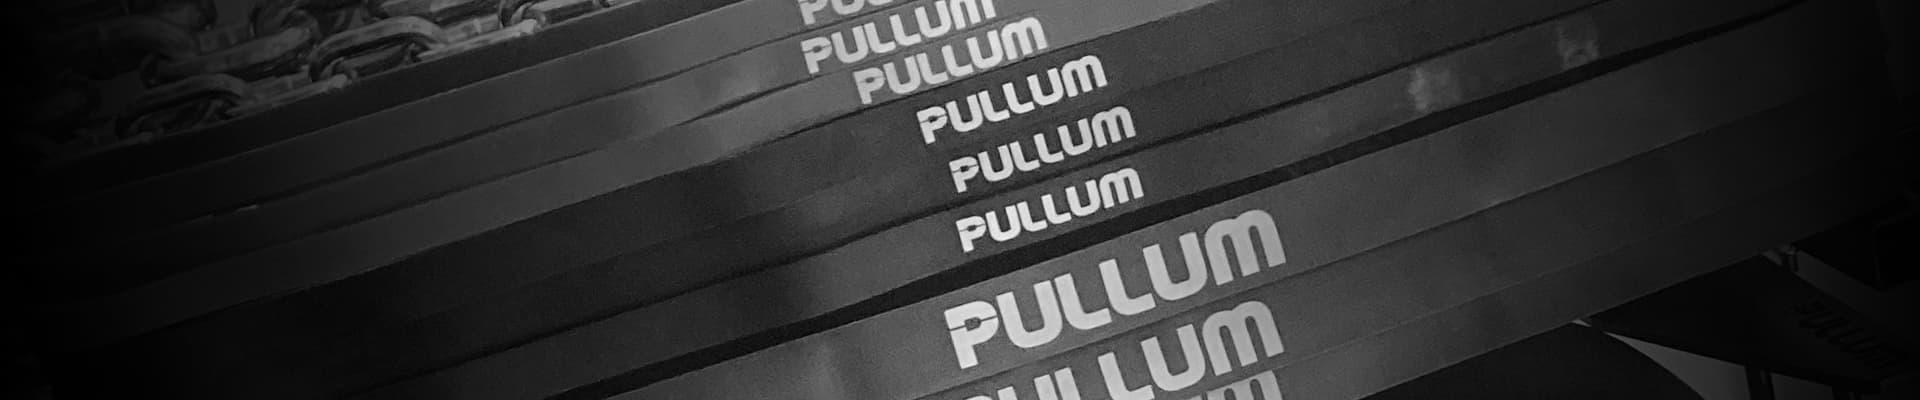 Pullum Sports resistance bands